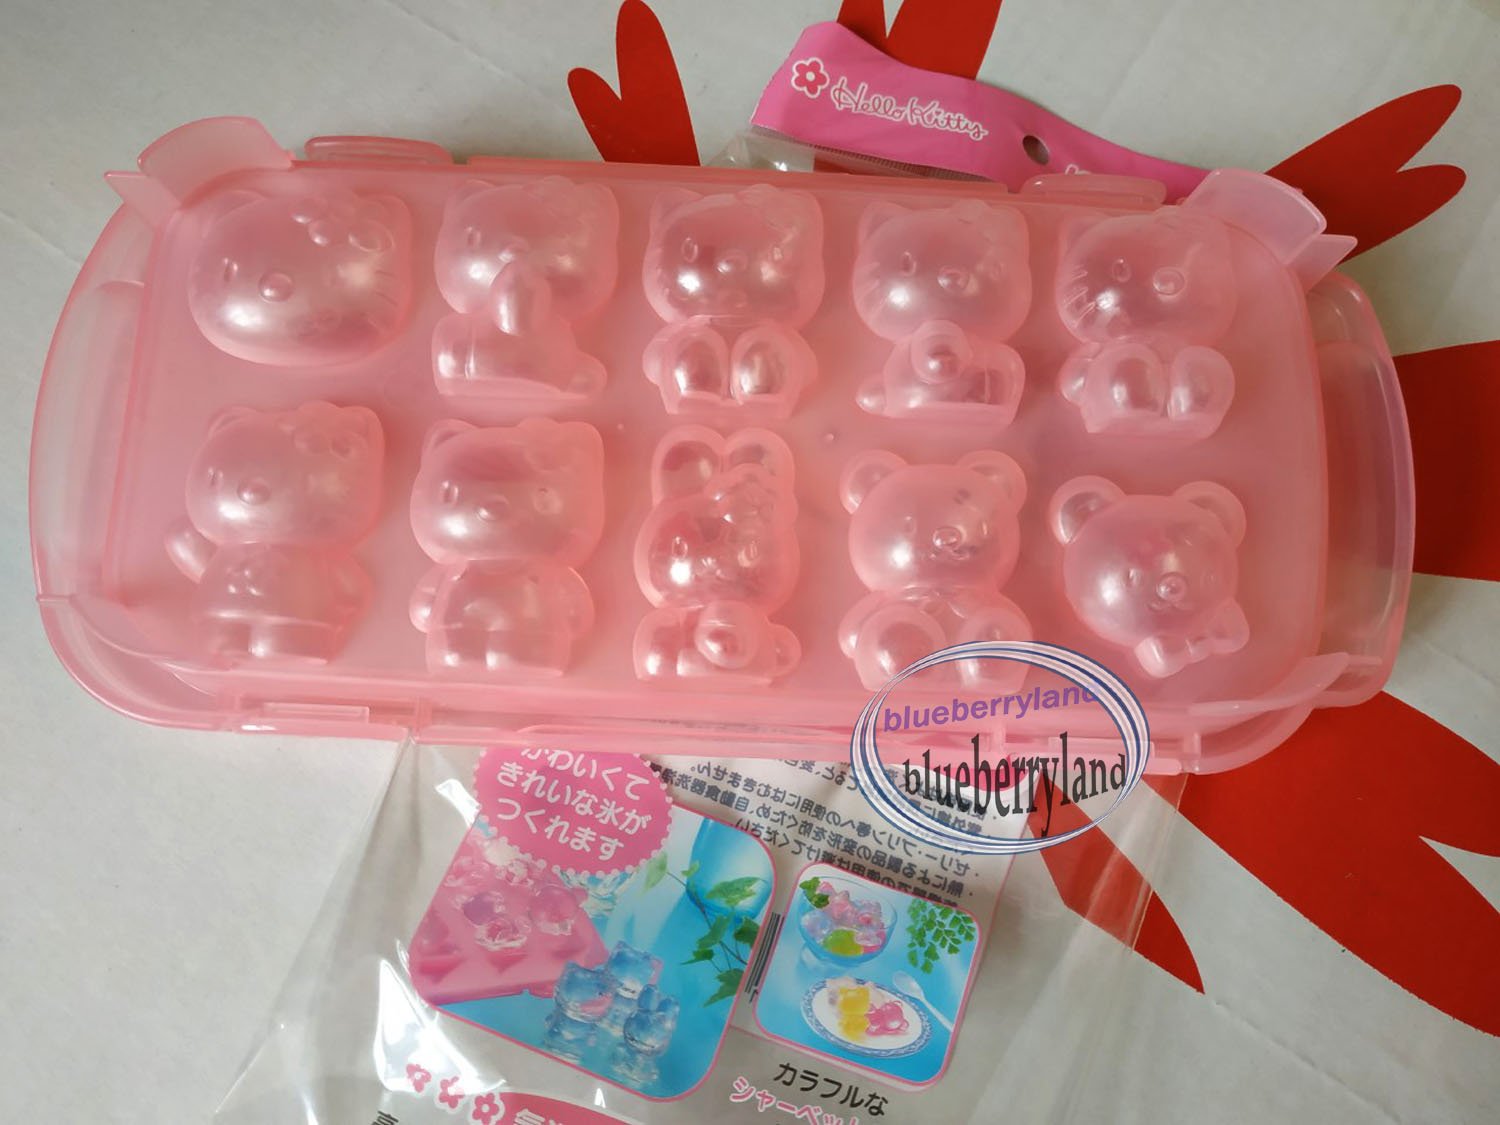 Sanrio Hello Kitty Silicone Mold Ice Cube Tray Makes 10 Cubes